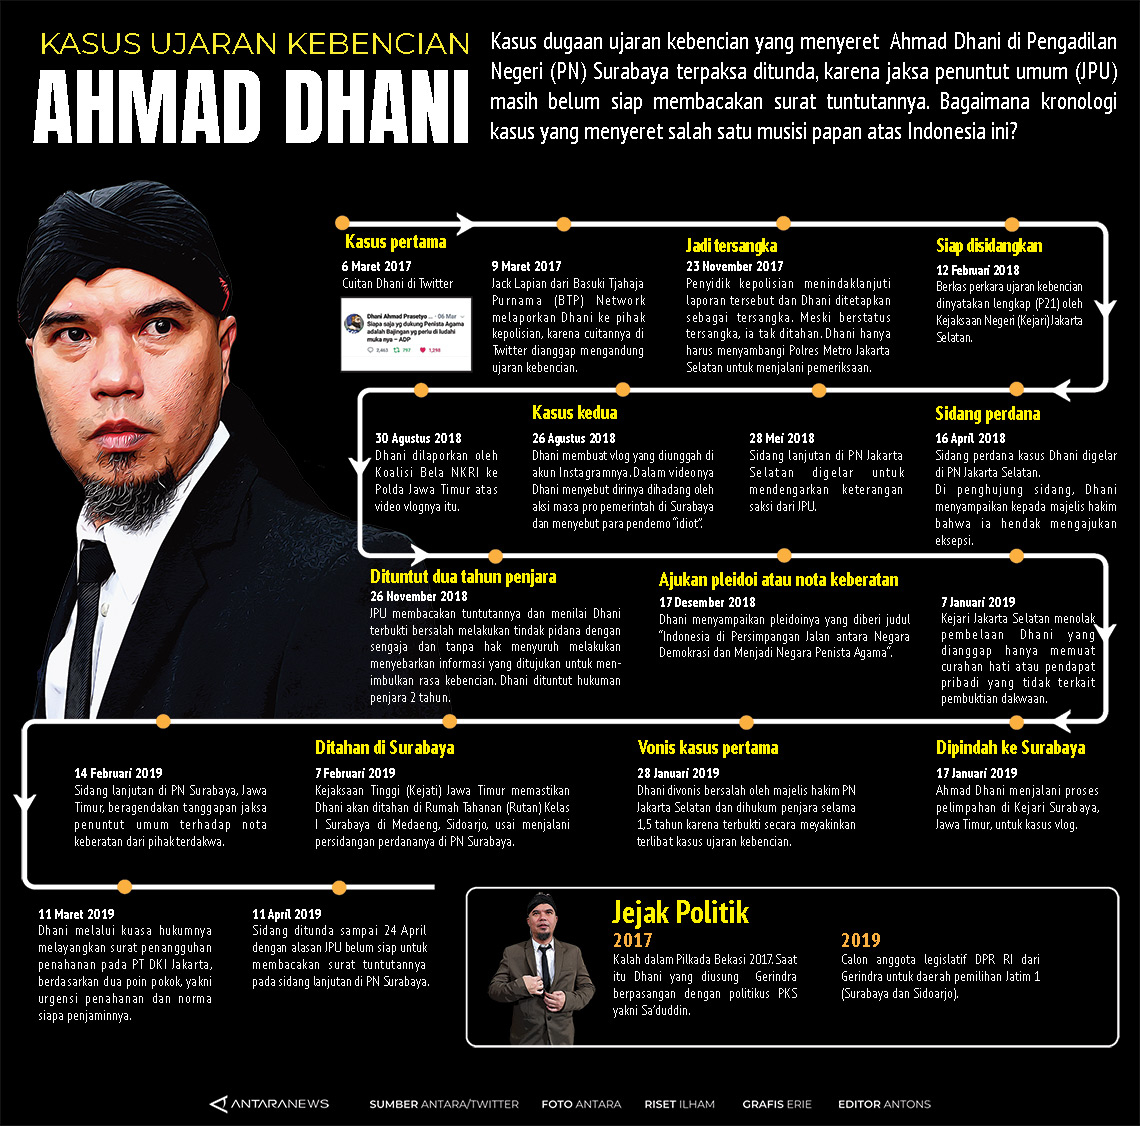 Infografik Kasus Ujaran Kebencian Ahmad Dhani Antara News